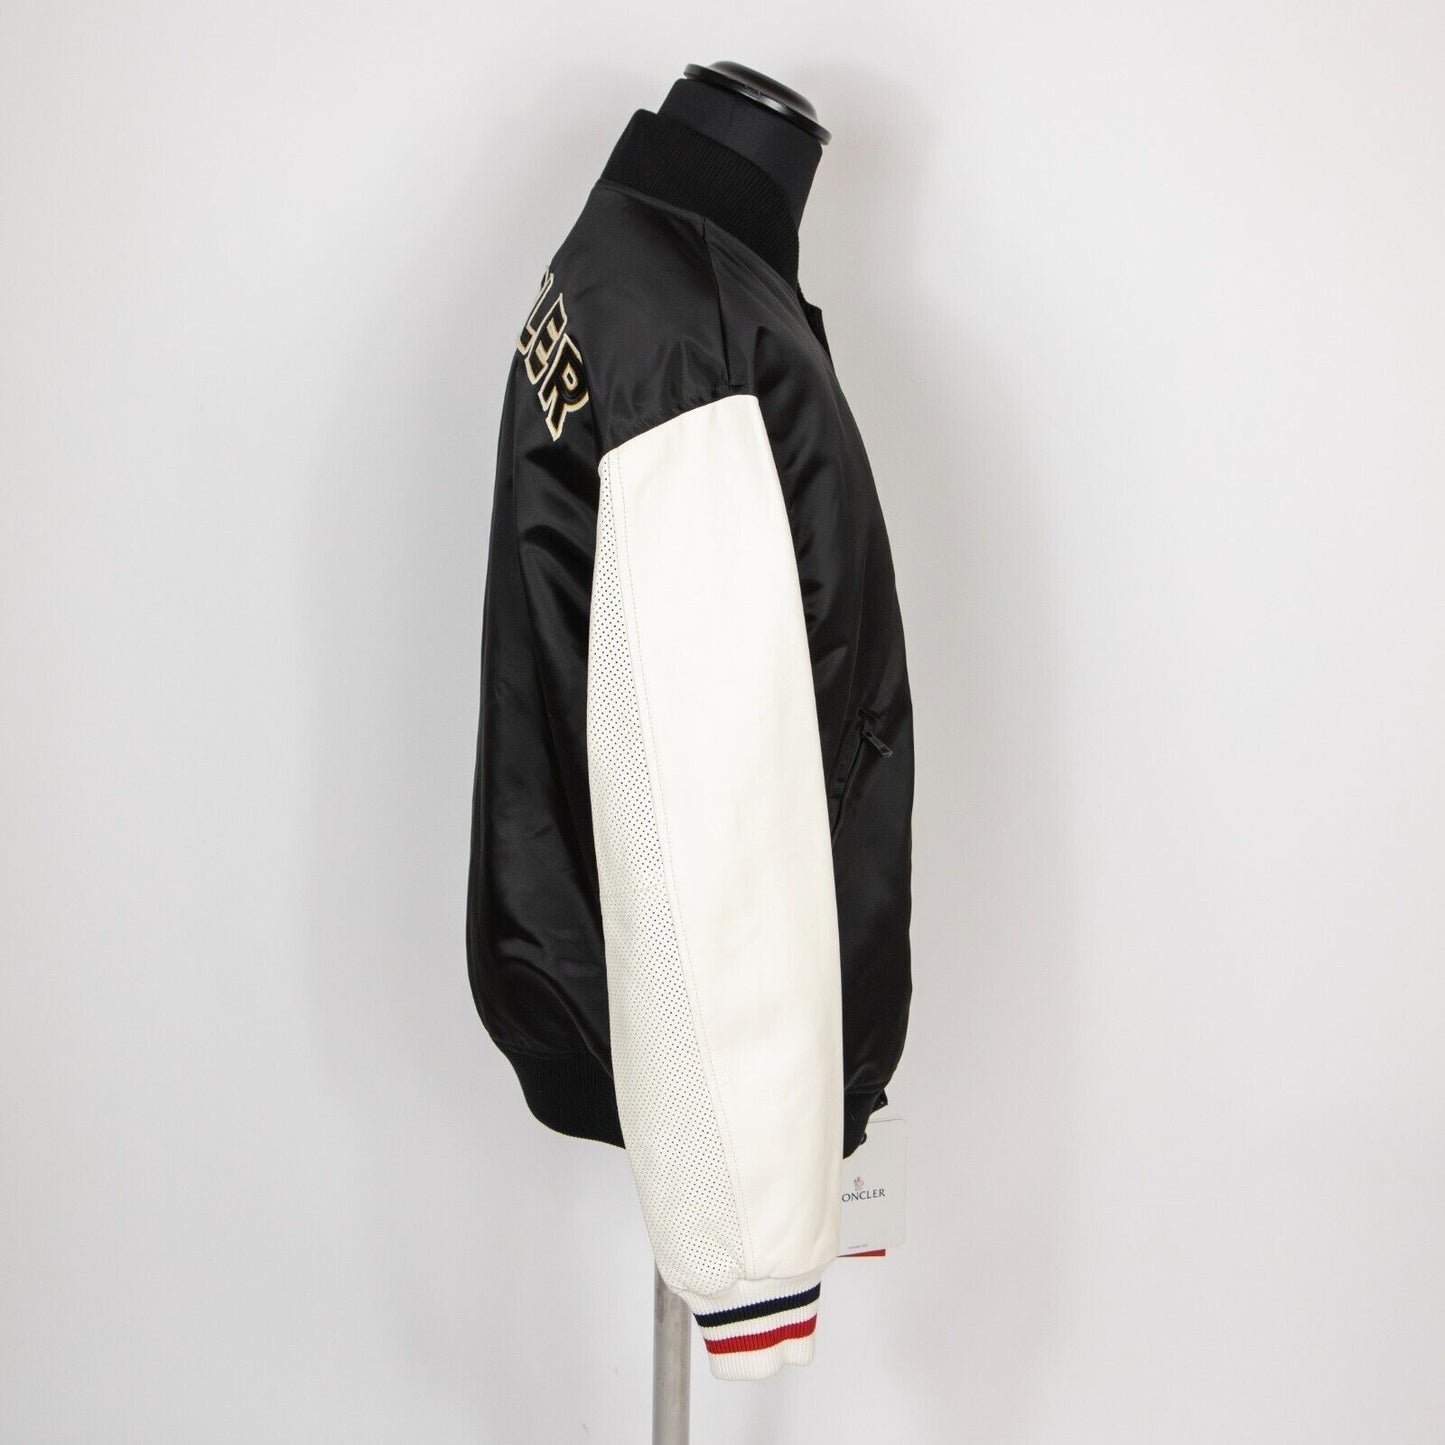 Moncler baseball jacket black & white  size M RRP £1340 (#H1)